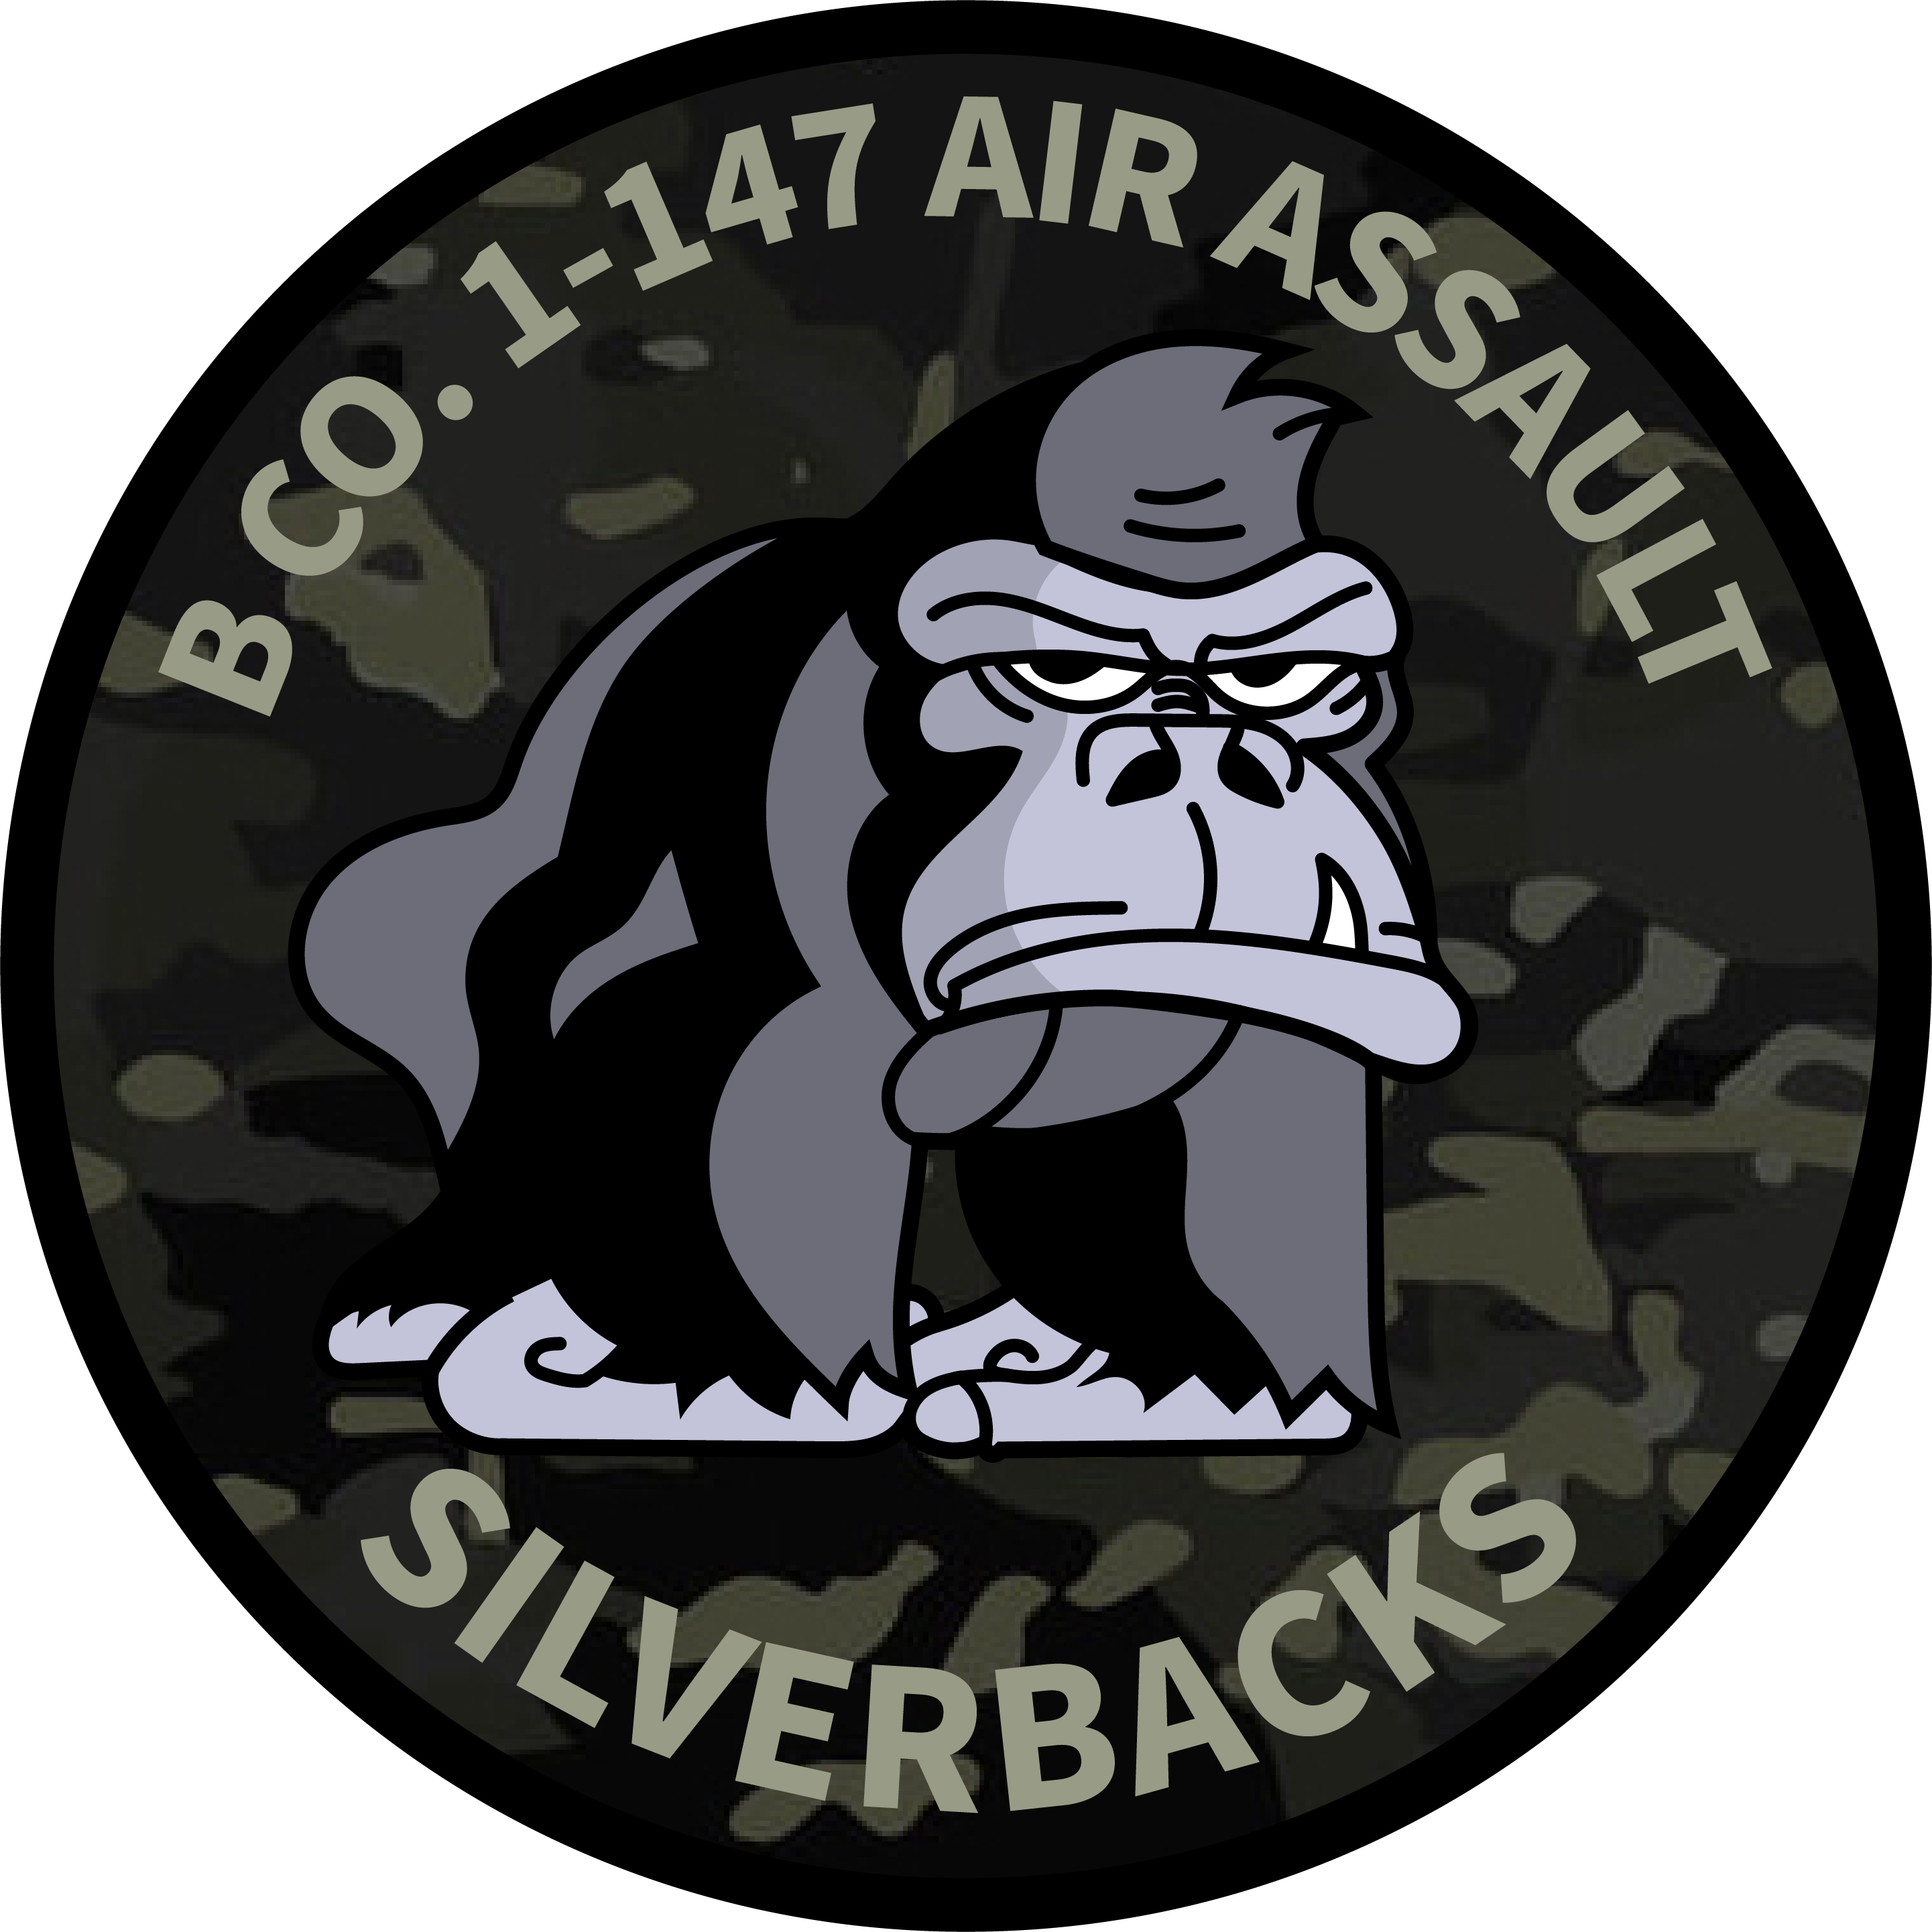 B Co, 1-147 AHB "Silverbacks"